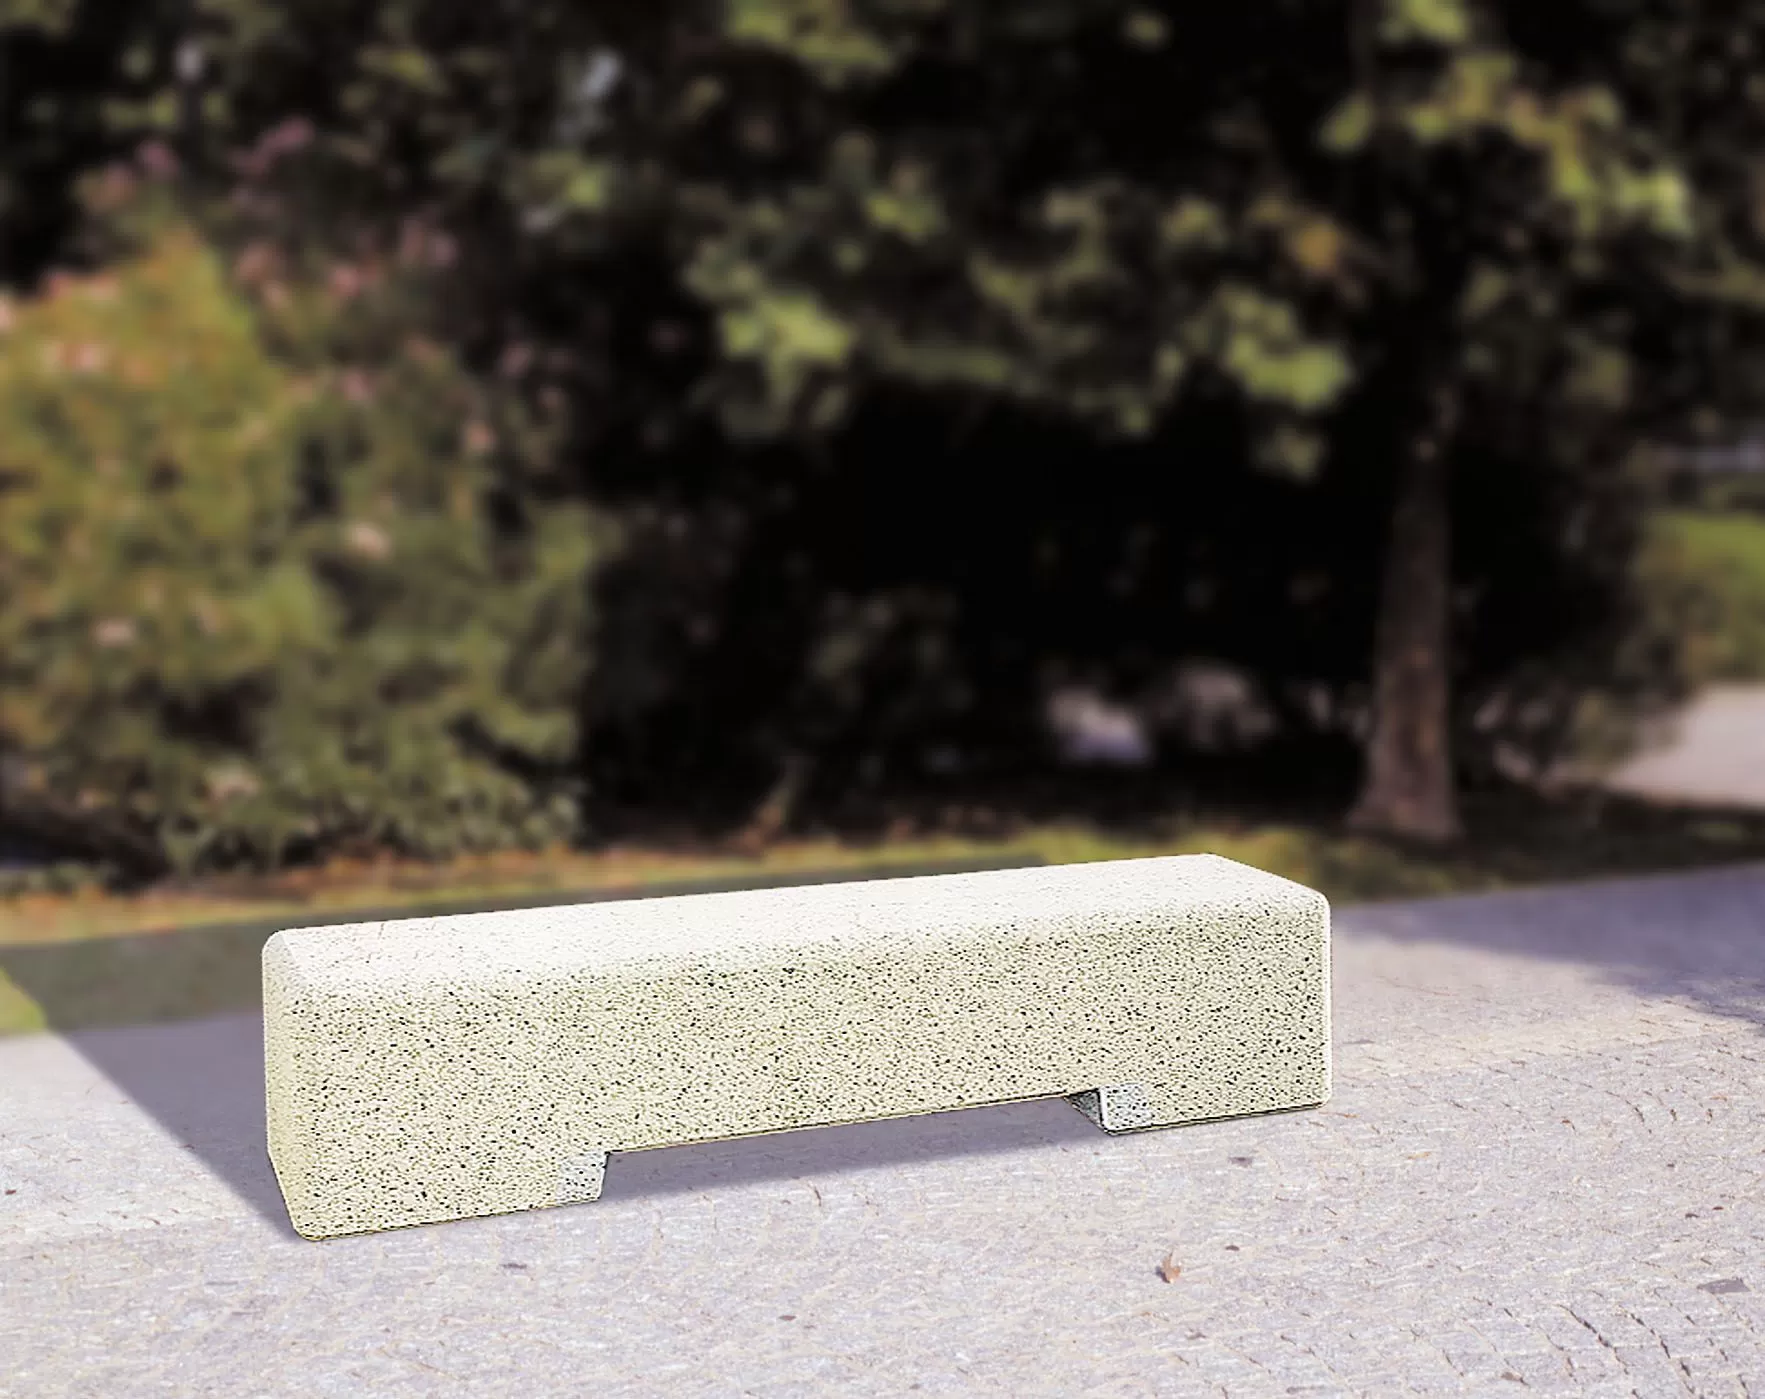 Protective concrete bollard